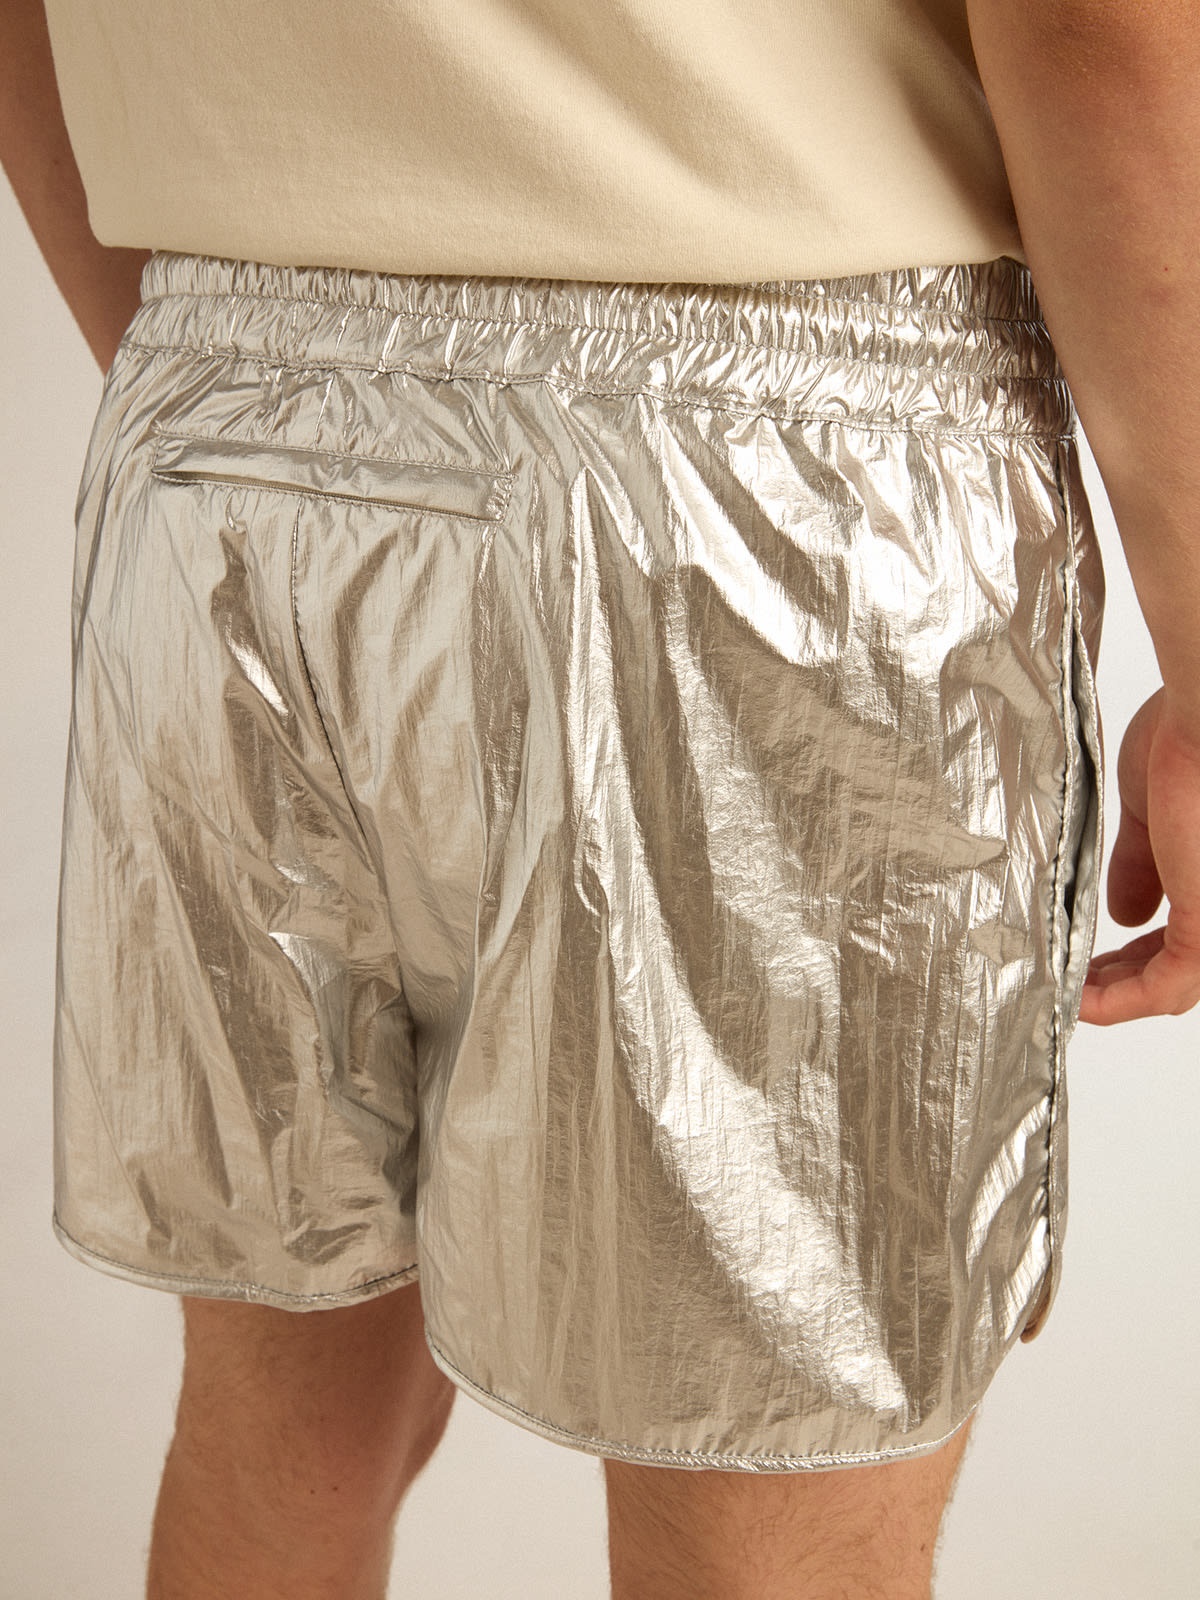 Men's running shorts in silver fabric - 5